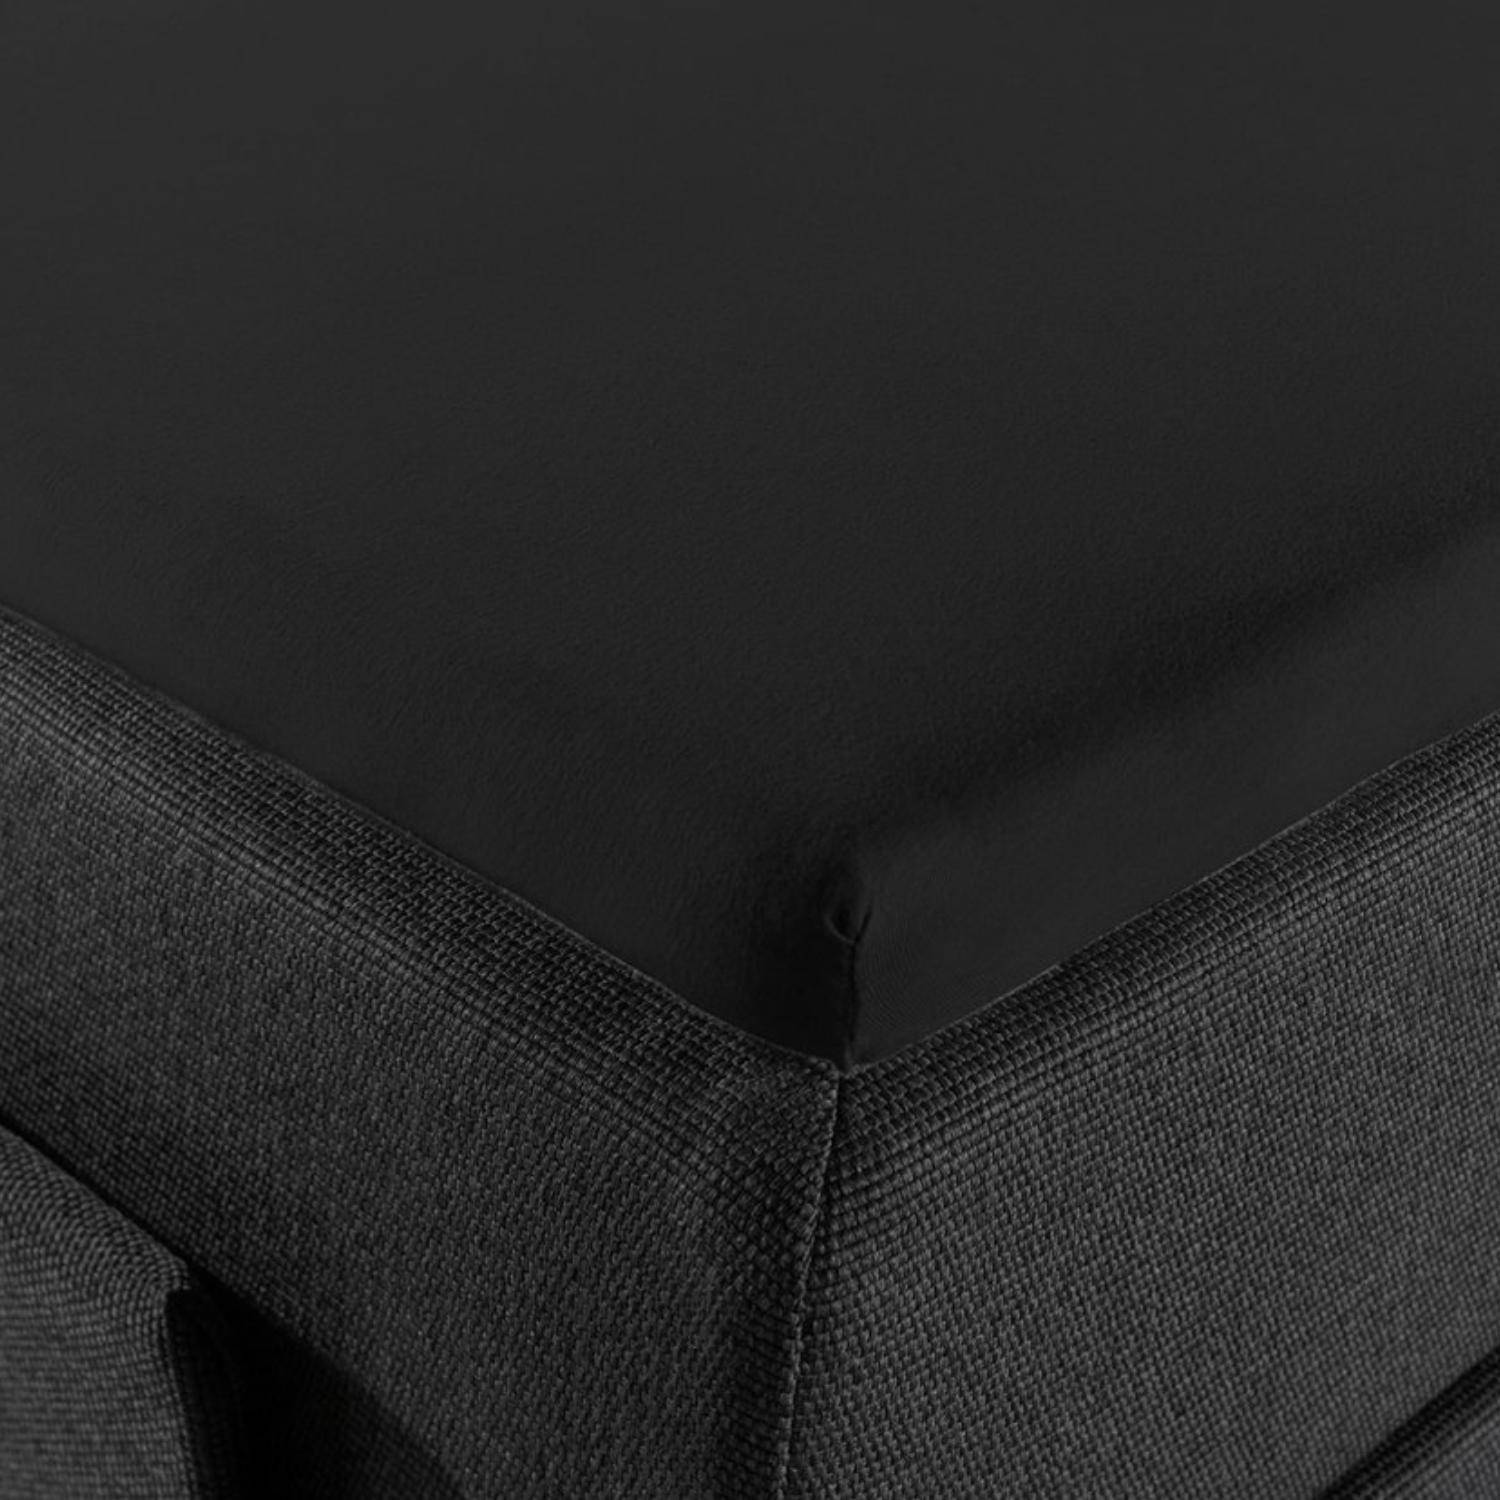 Droomtextiel Topper Hoeslaken Dubbel Jersey Zwart - 160x220 cm - 100% Zacht Katoen